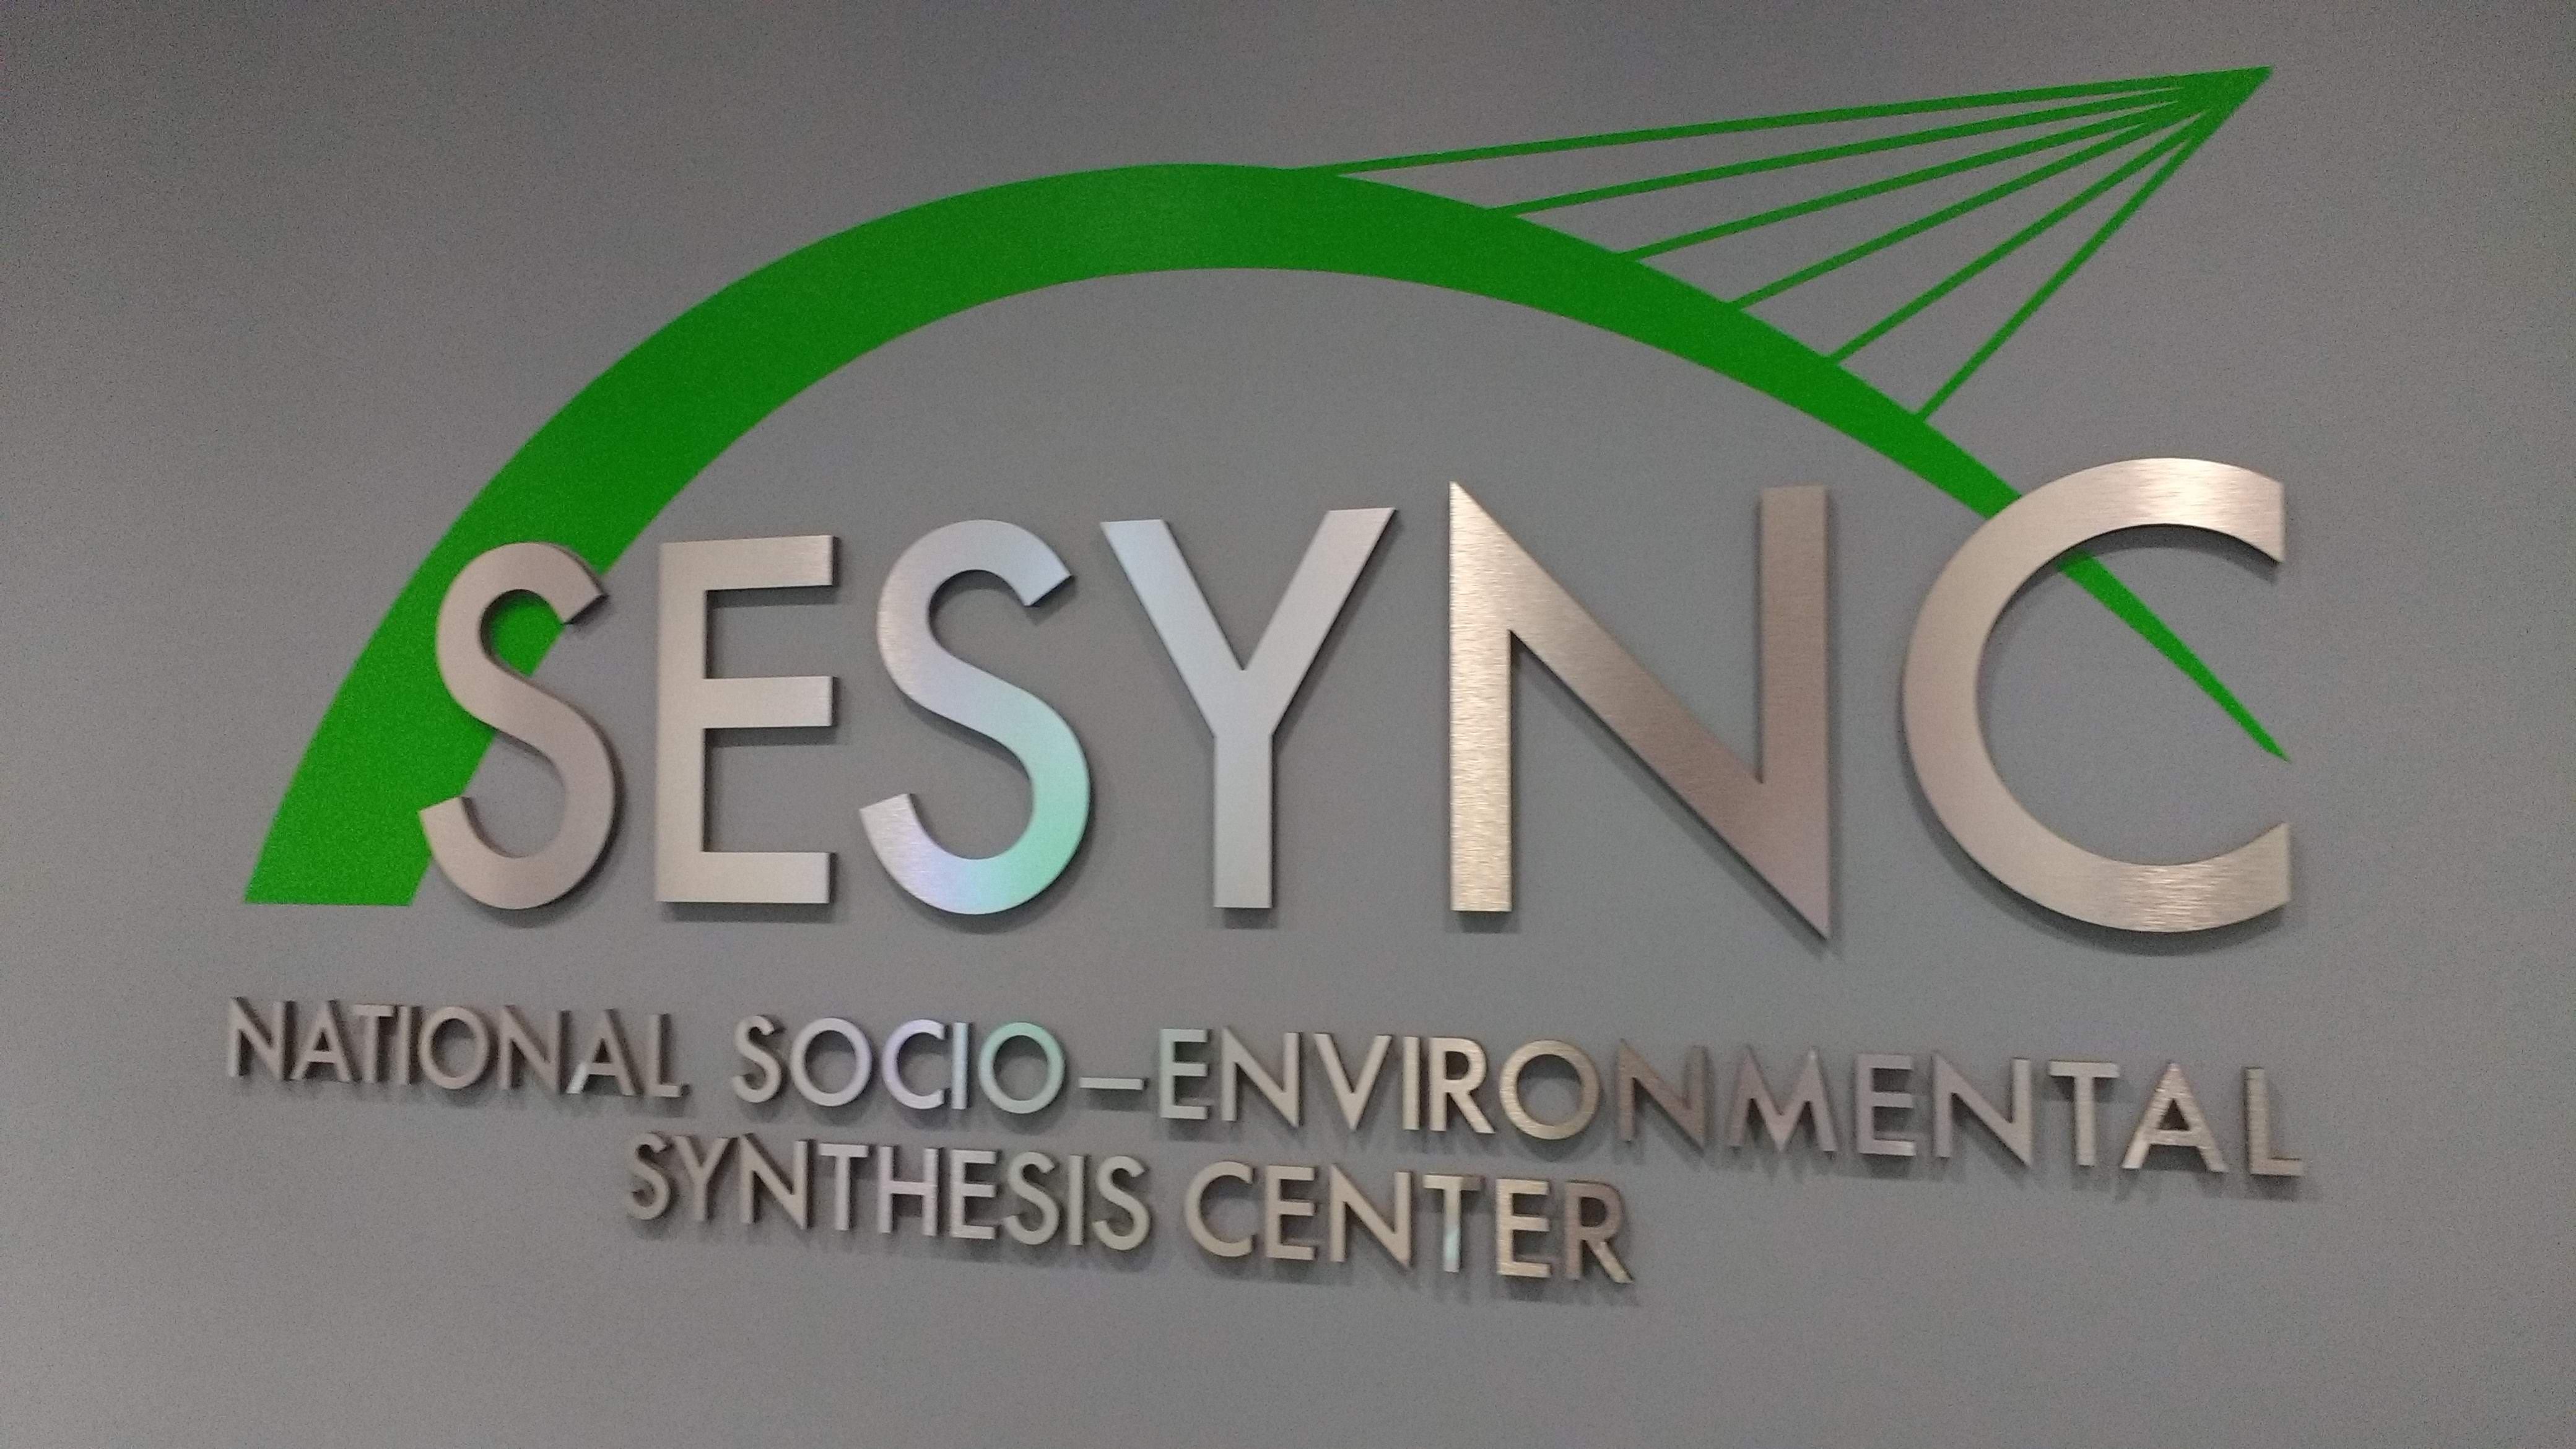 sesync_logo01.jpg